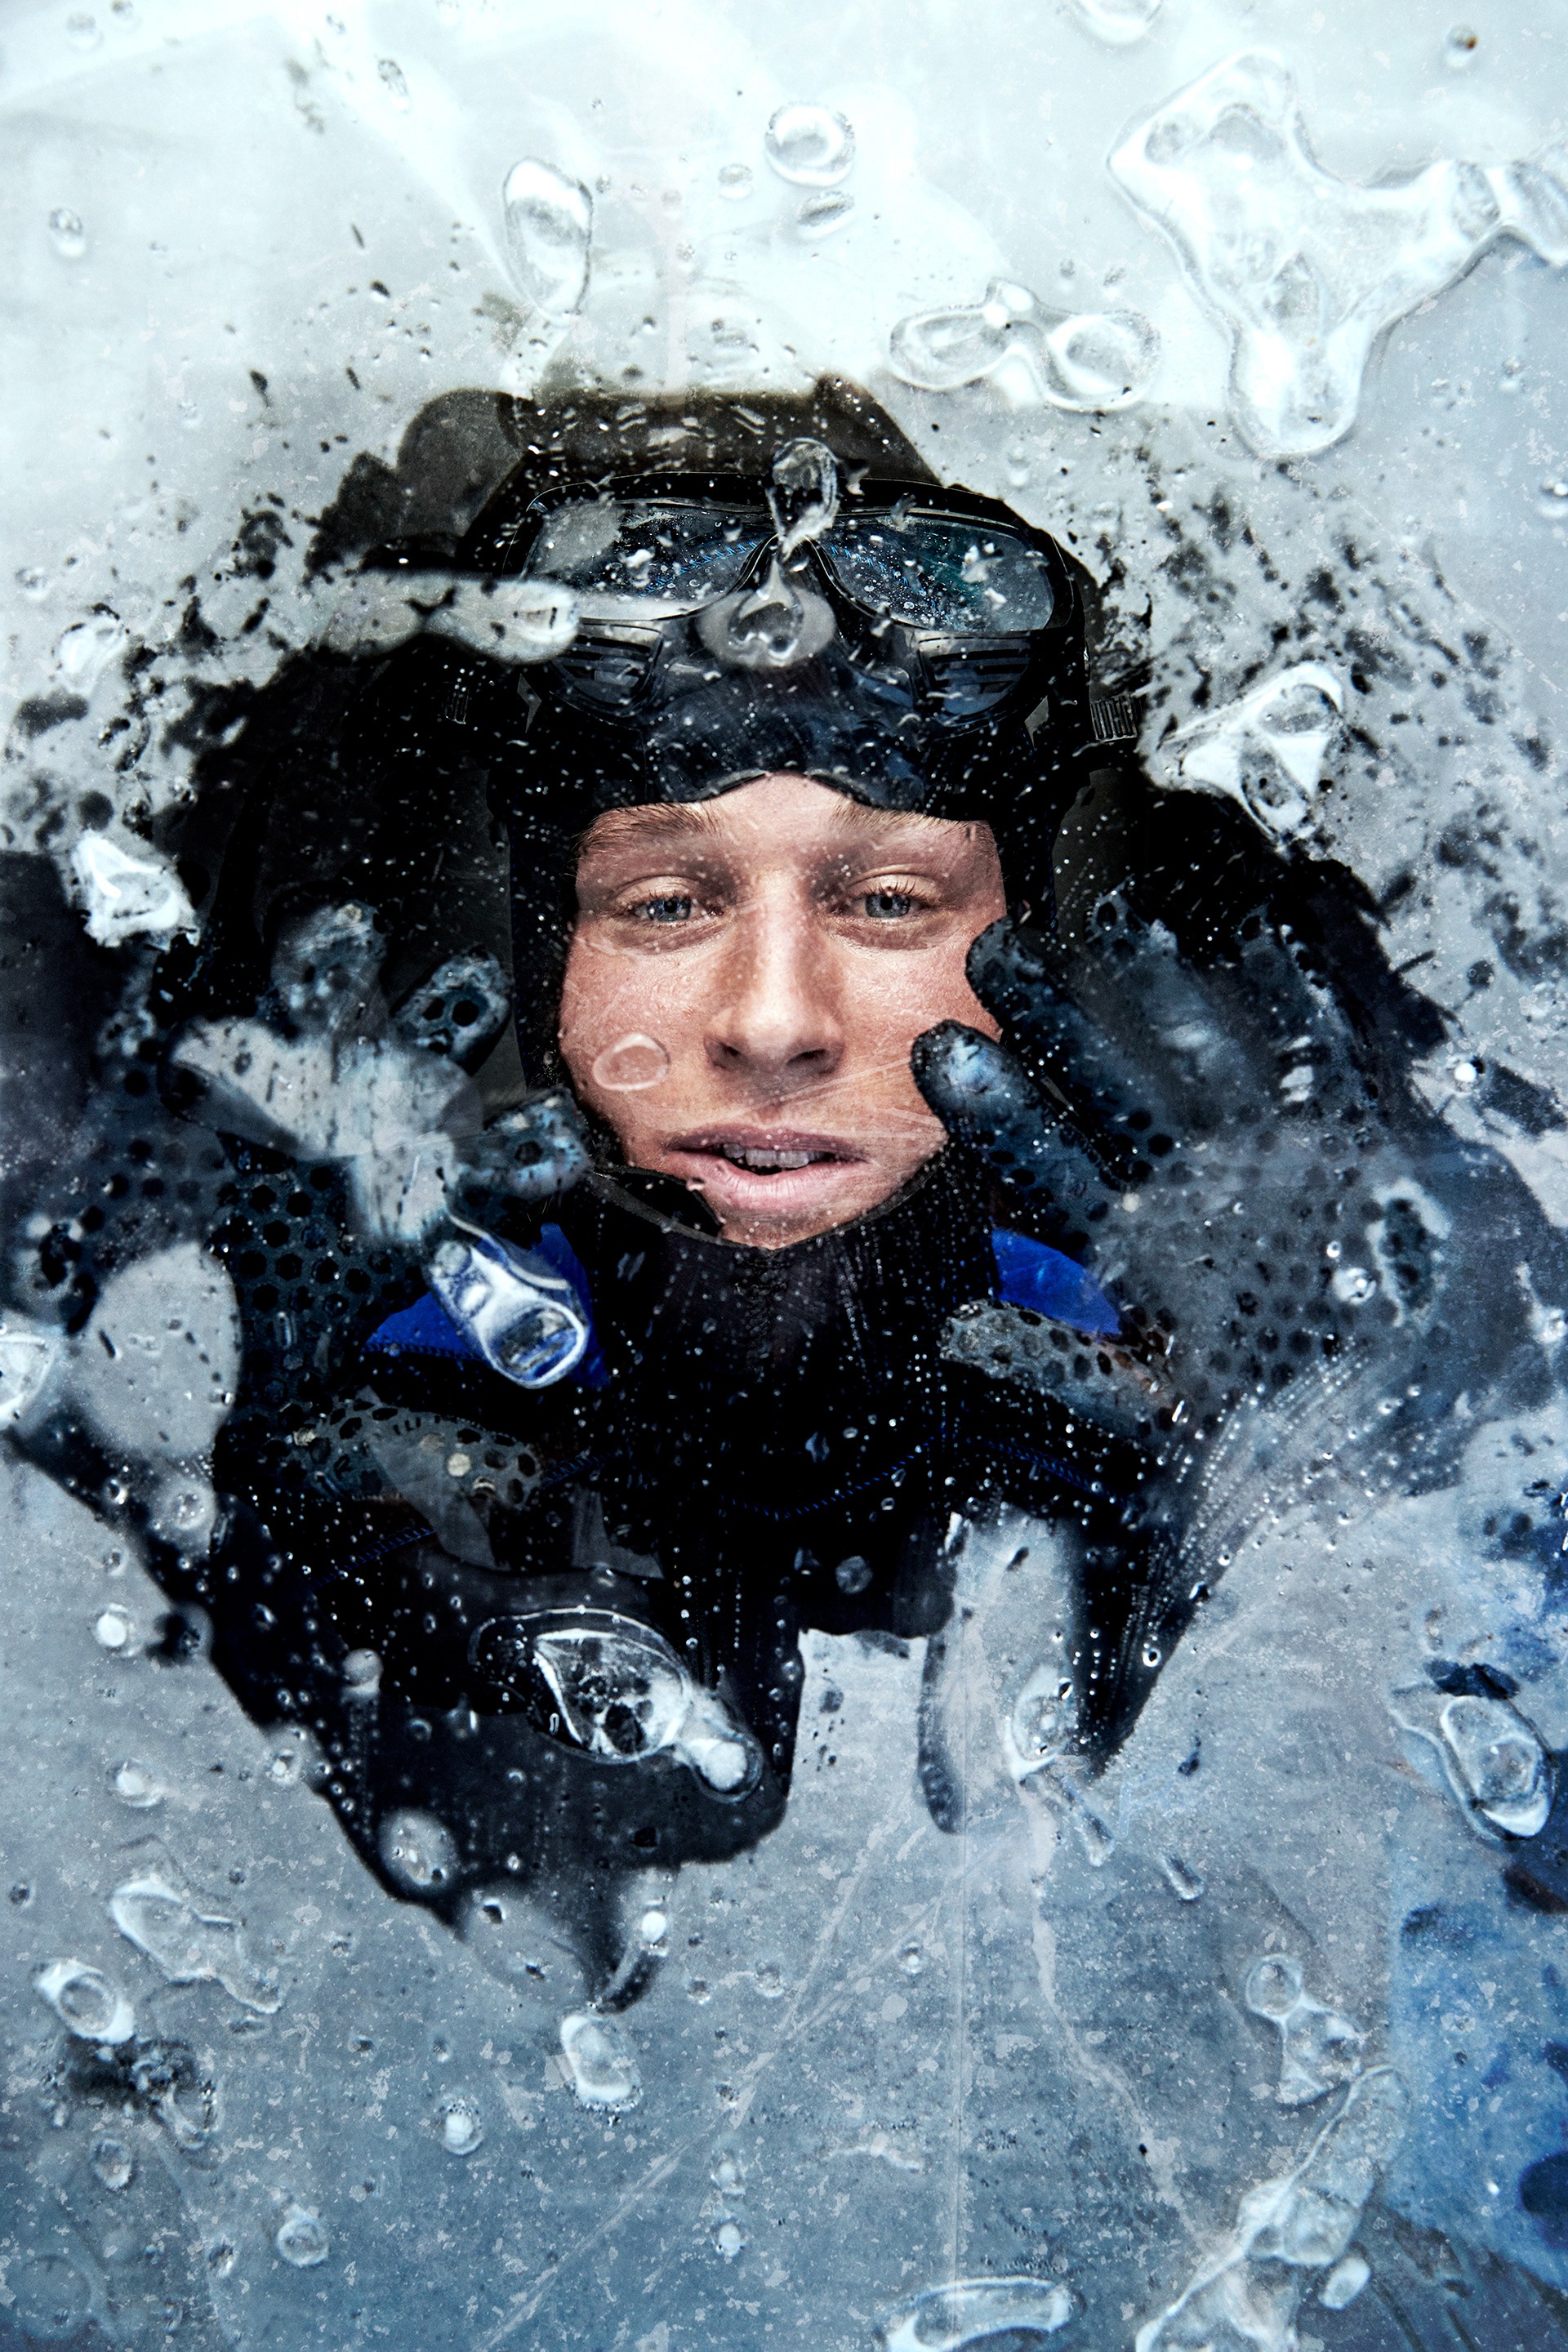 Финалист в категории Люди, 2019. Триатлон в Антарктиде, спортсмен Андерс Хофман. Автор Джаспер Гроннемарк